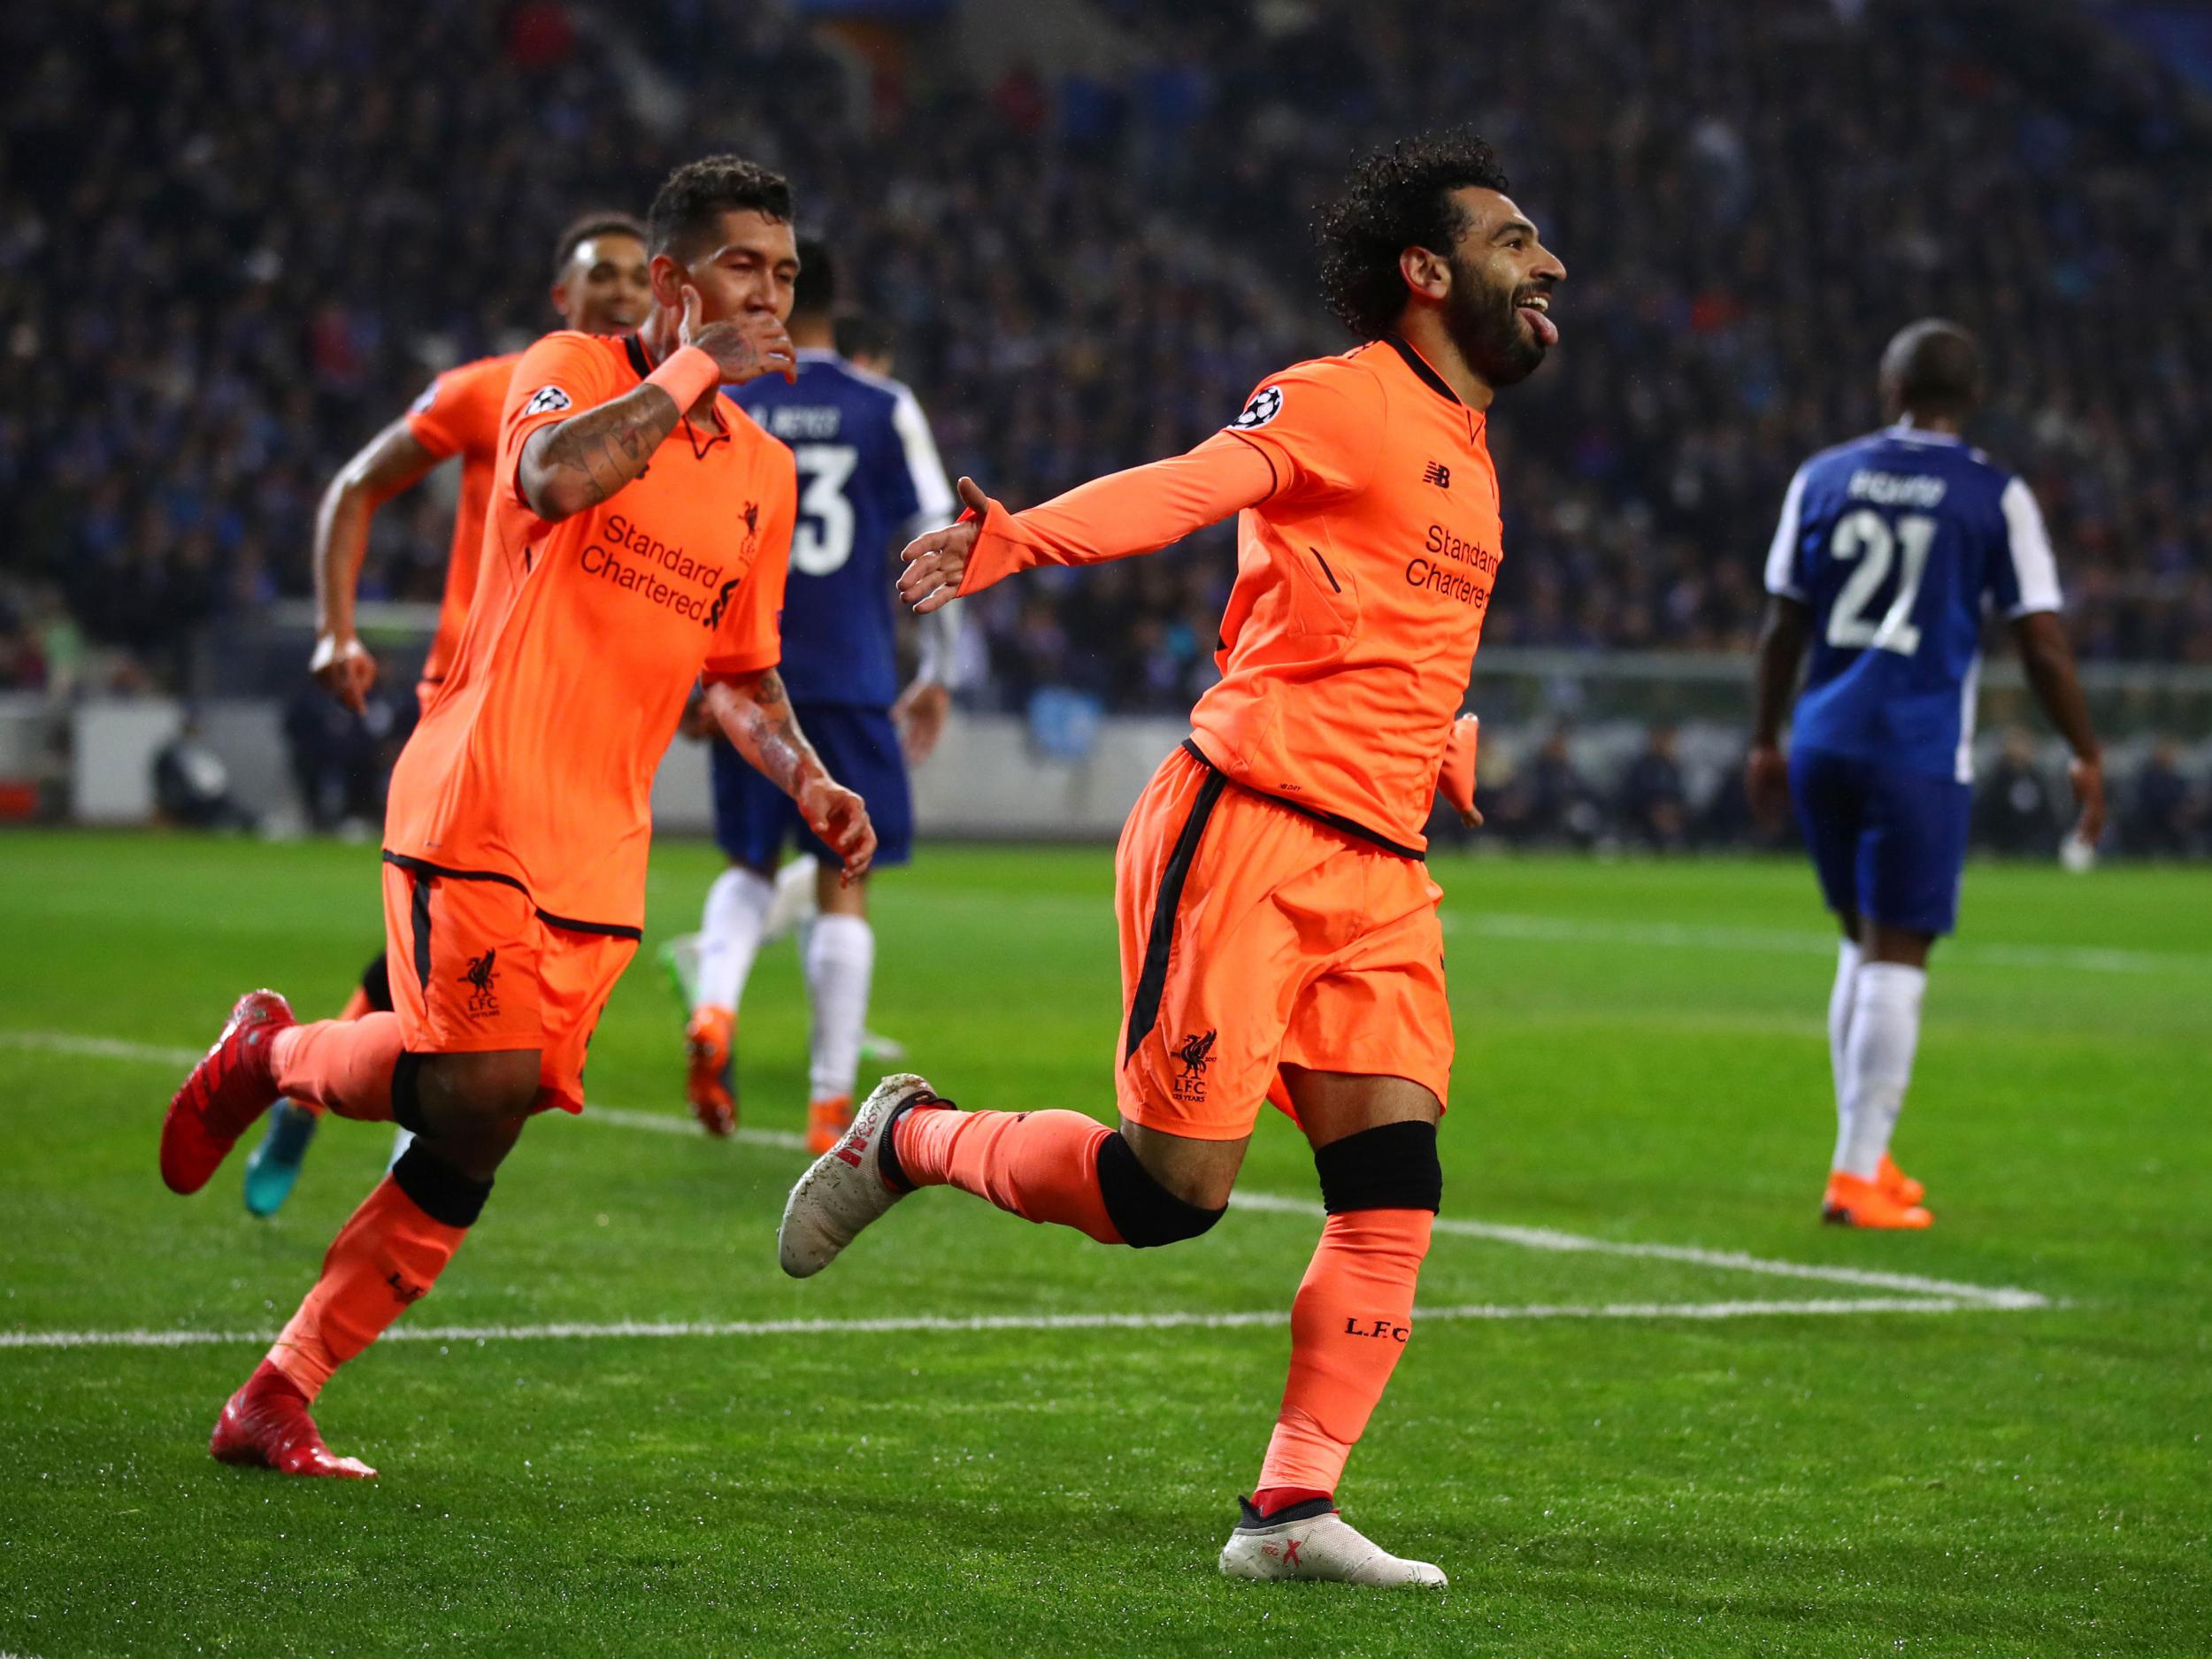 Mohamed Salah celebrates scoring his 30th goal for Liverpool